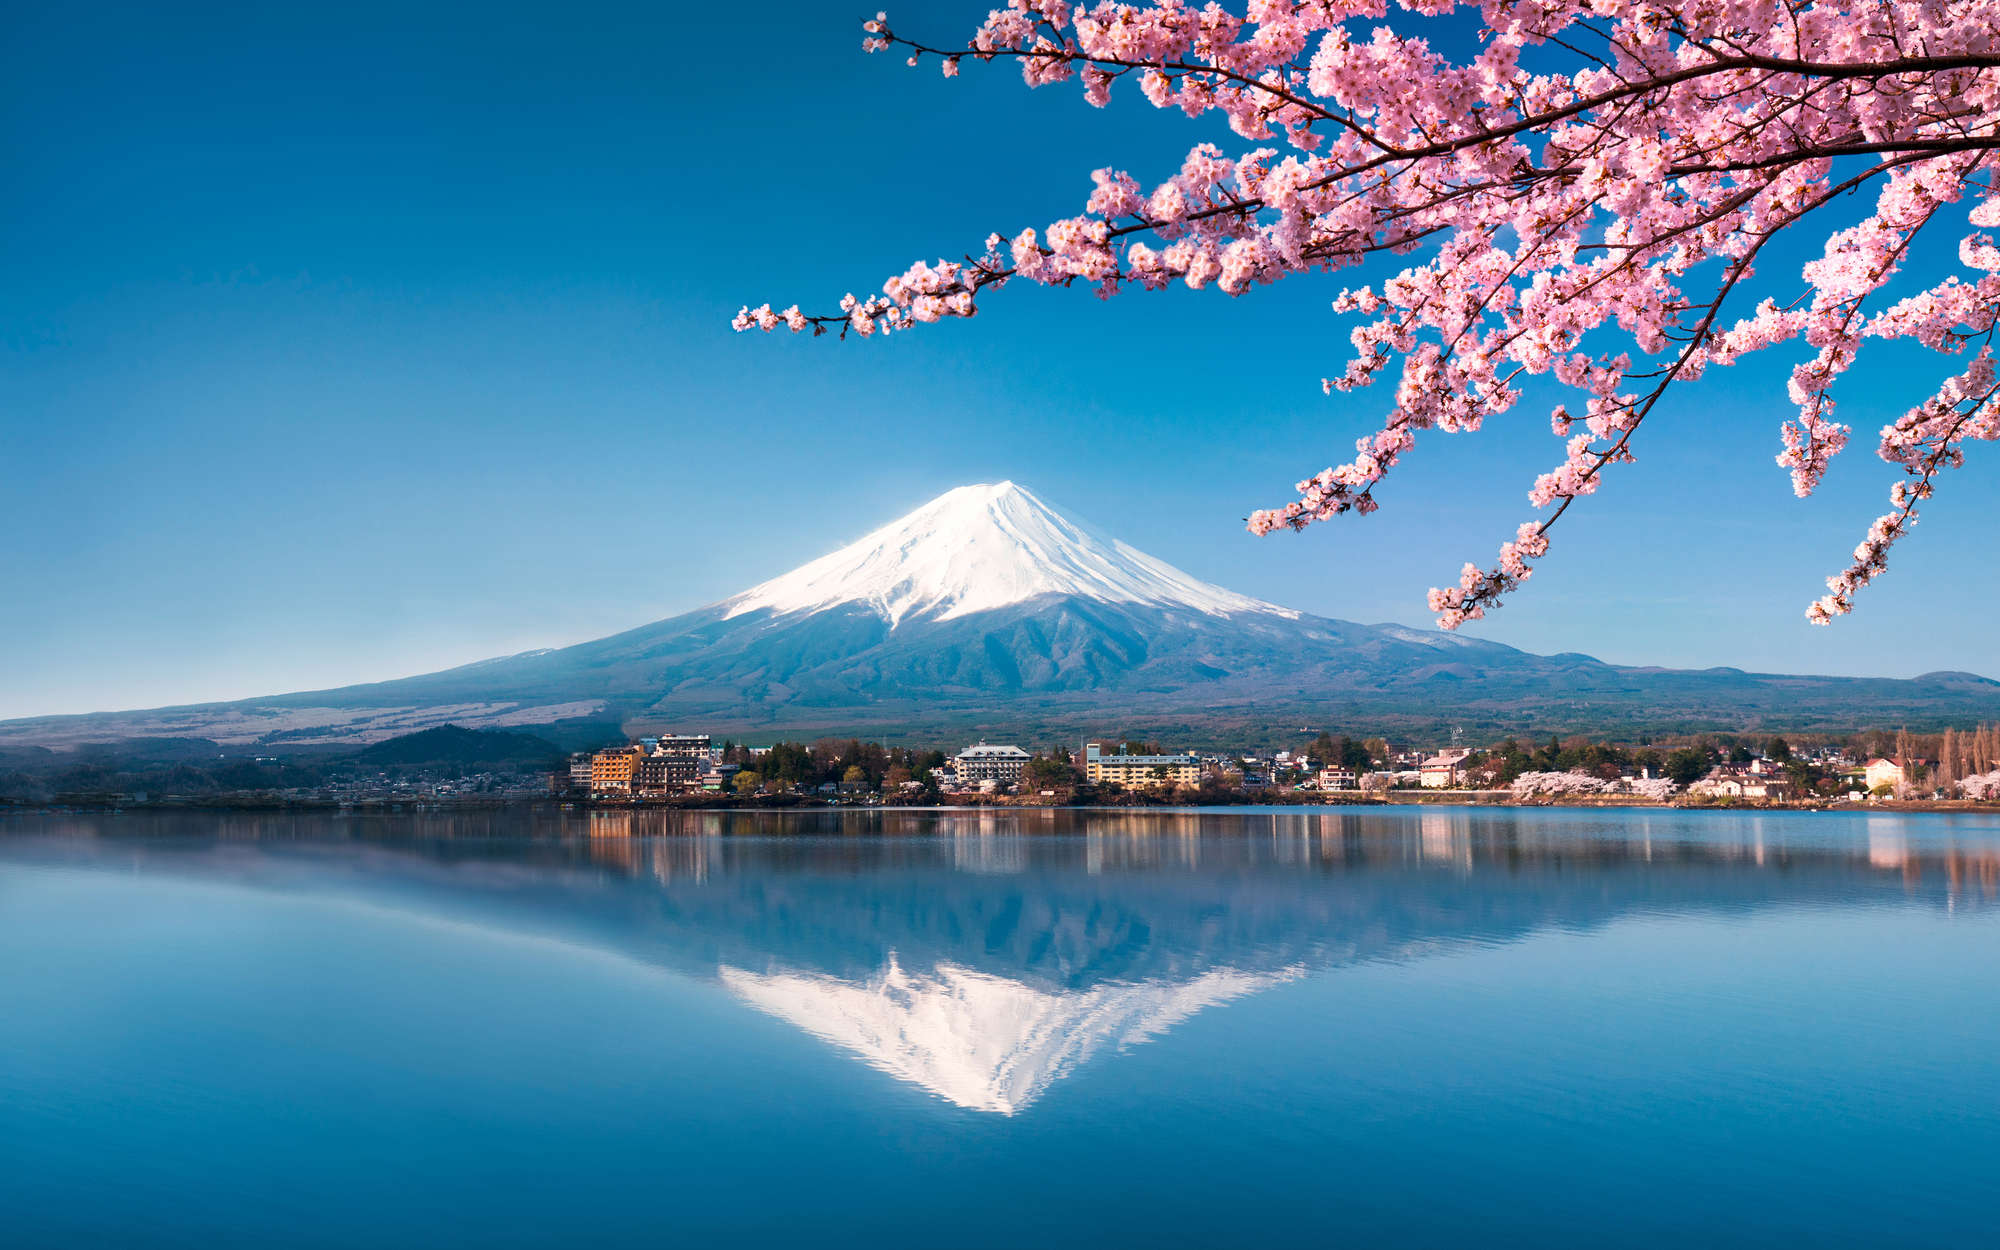             Fototapete Vulkan Fuji in Japan – Strukturiertes Vlies
        